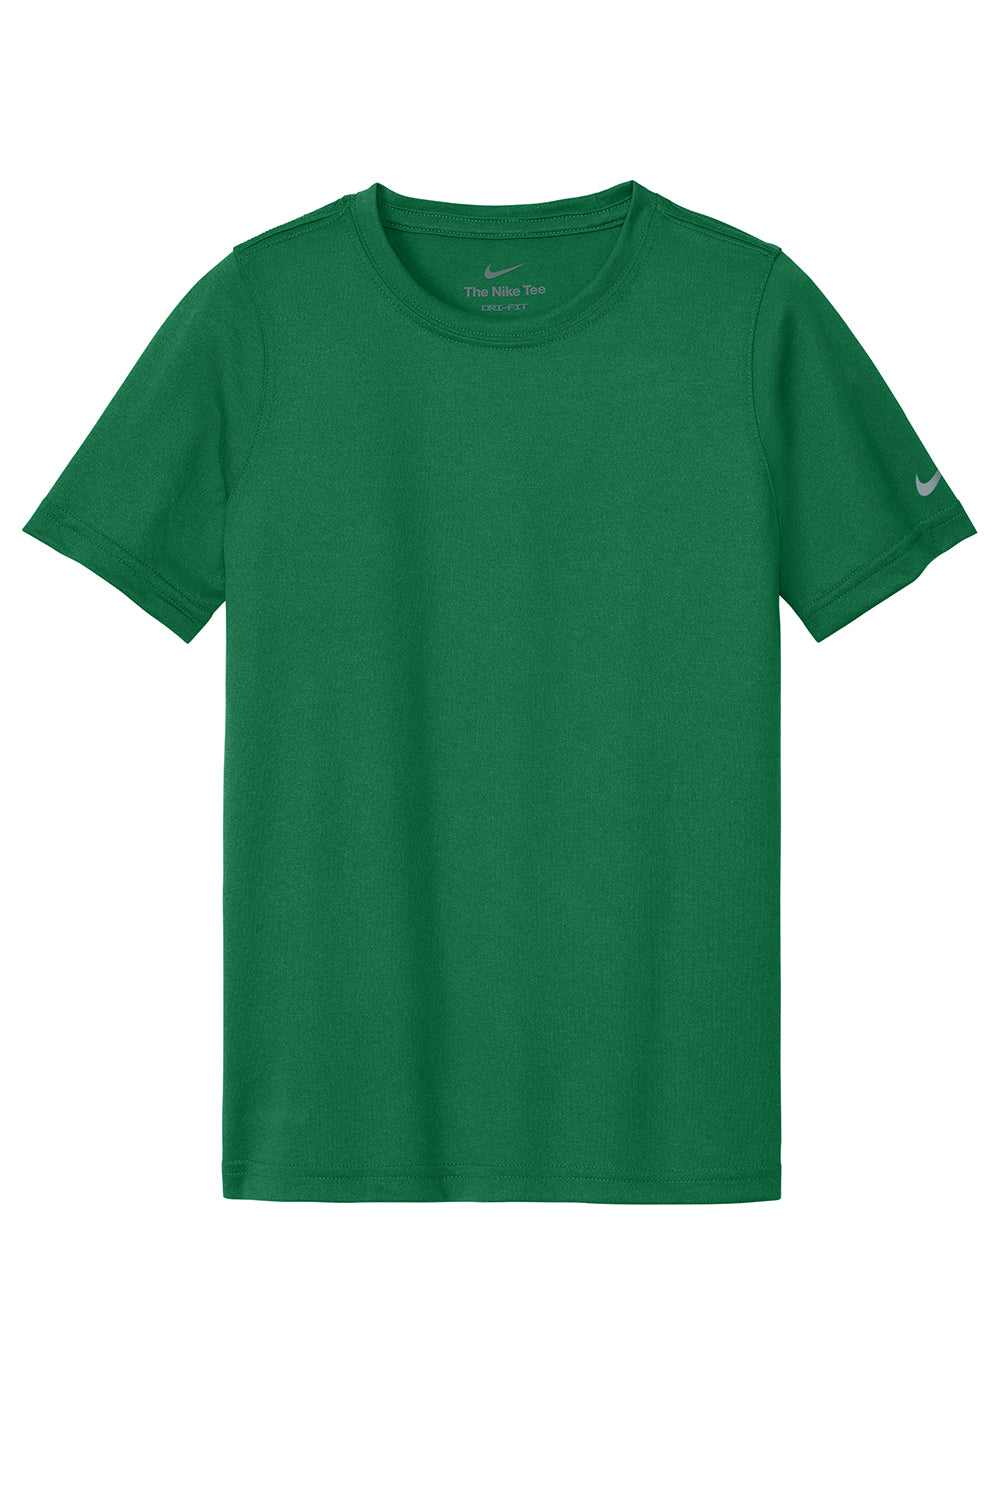 Nike NKDX8787 Youth rLegend Dri-Fit Moisture Wicking Short Sleeve Crewneck T-Shirt Gorge Green Flat Front